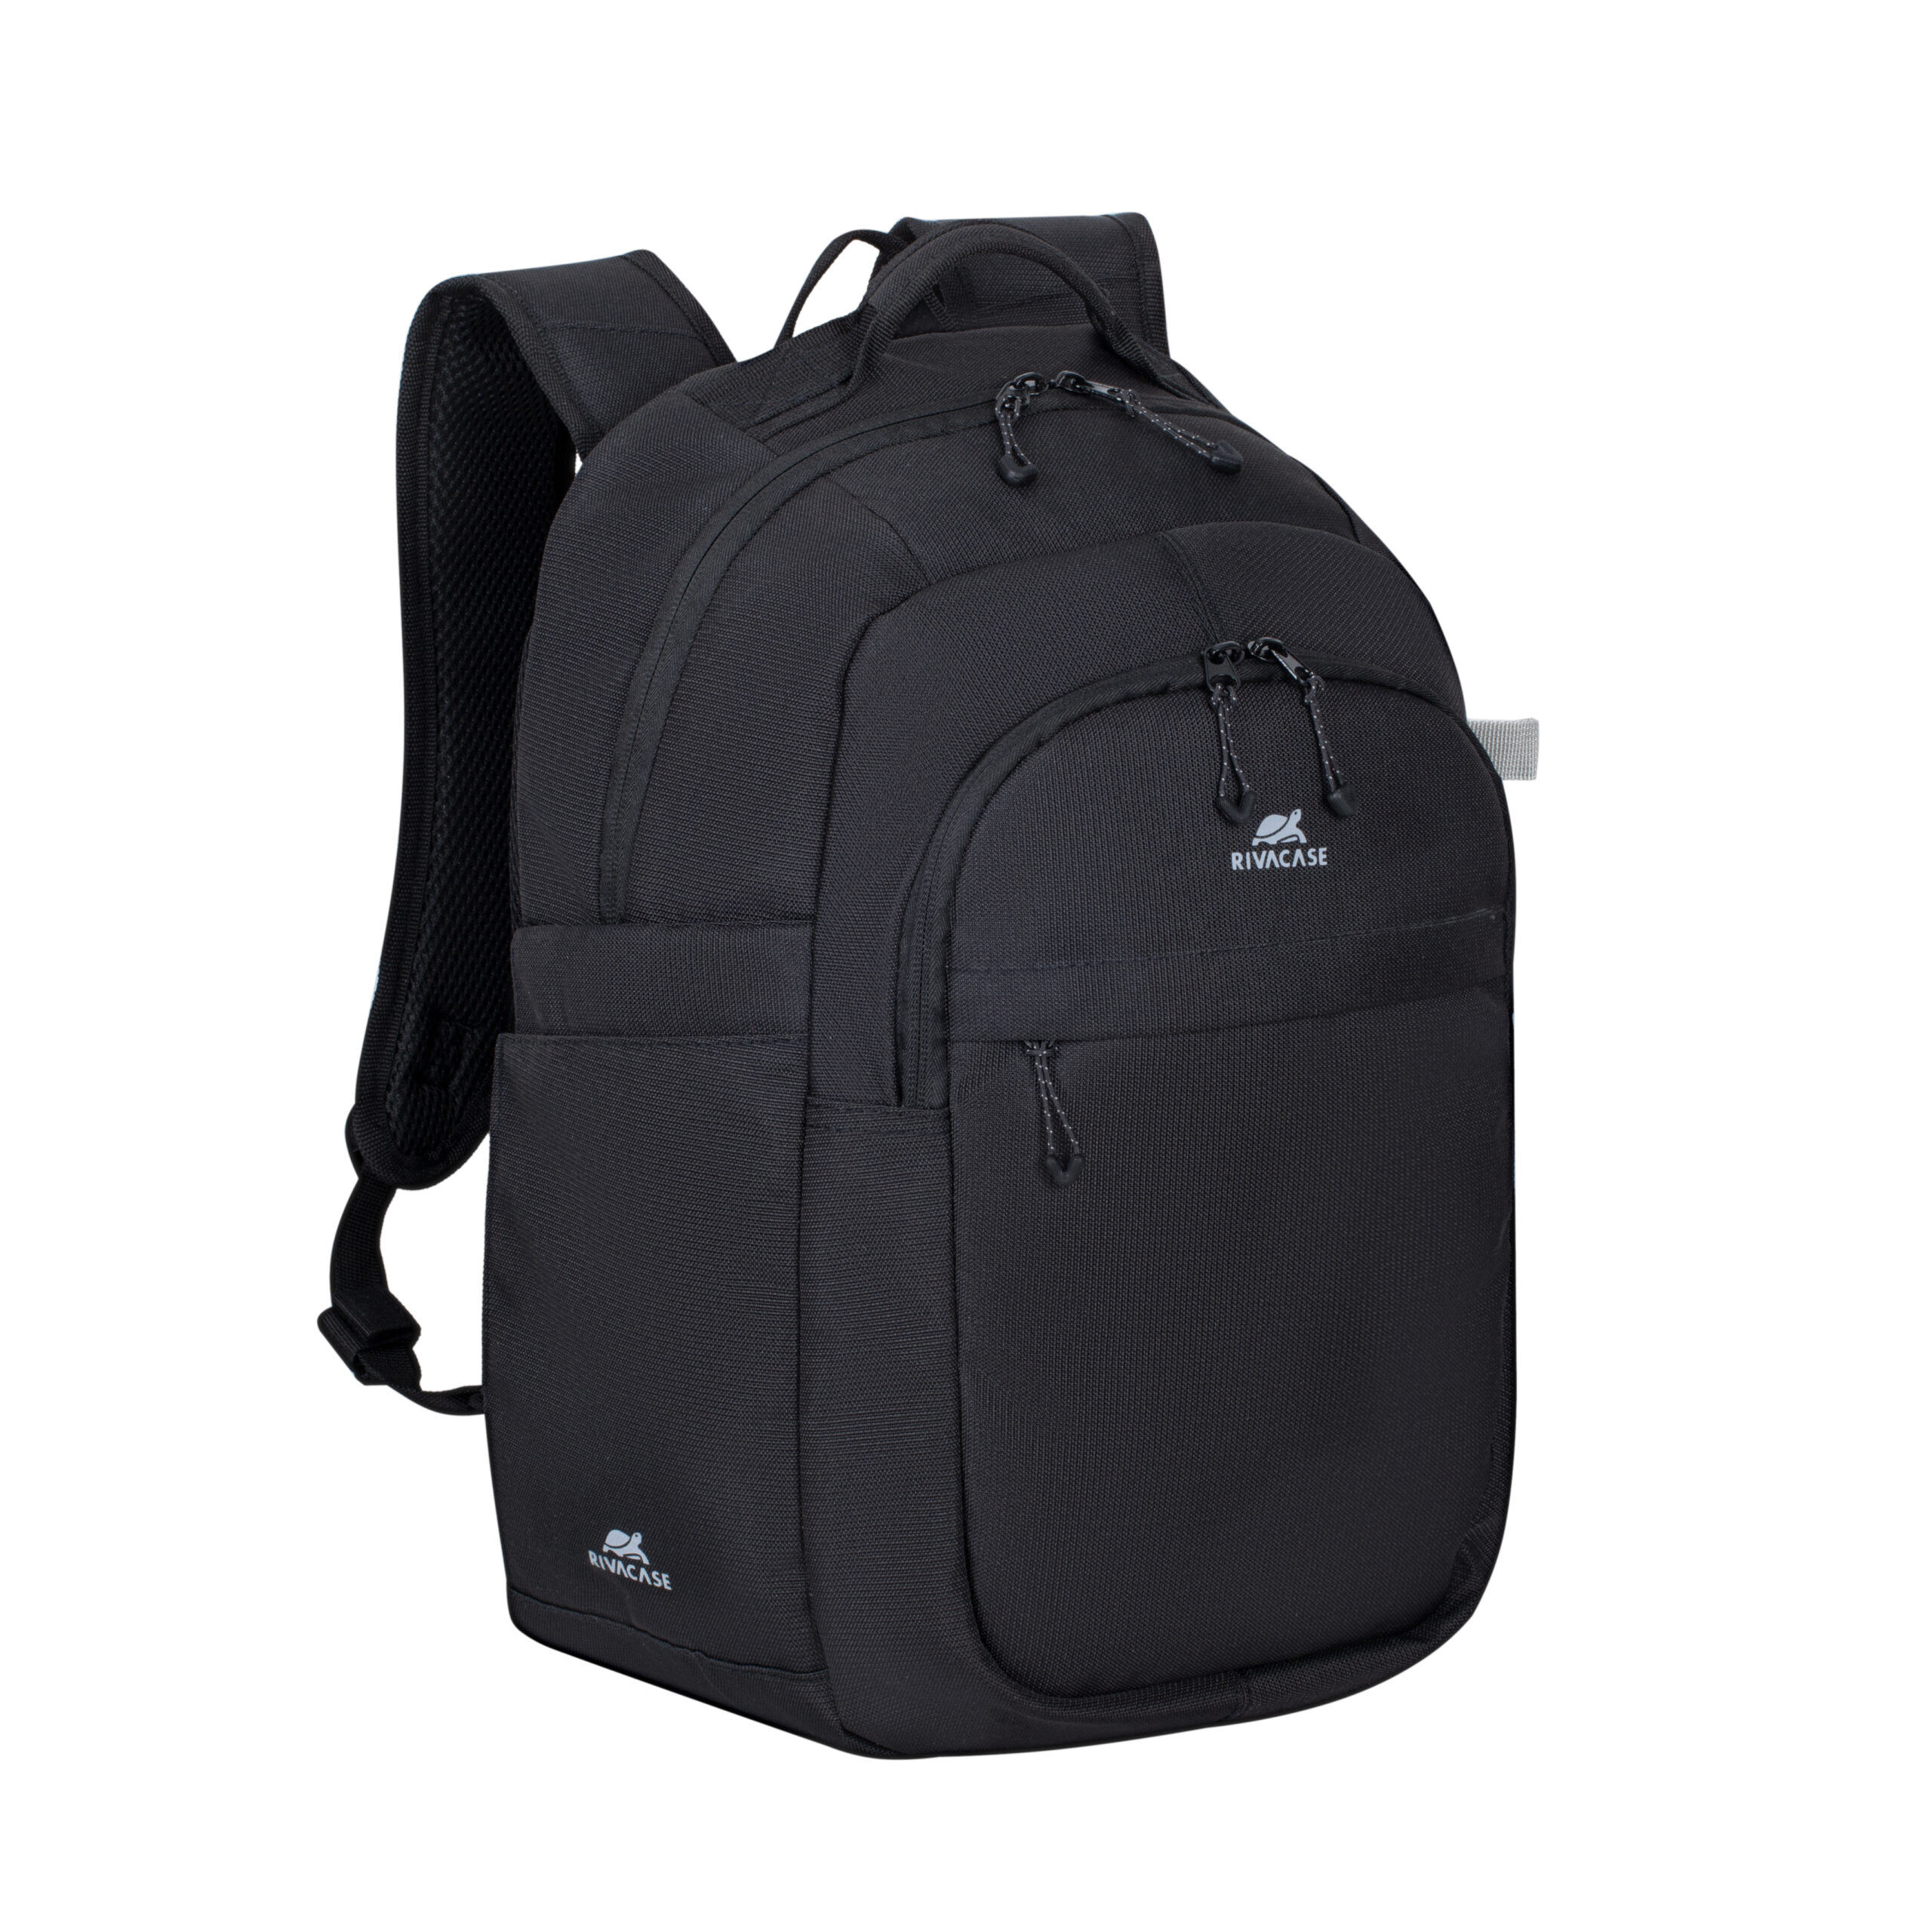 RIVACASE 5432 black Urban backpack 16L / 12